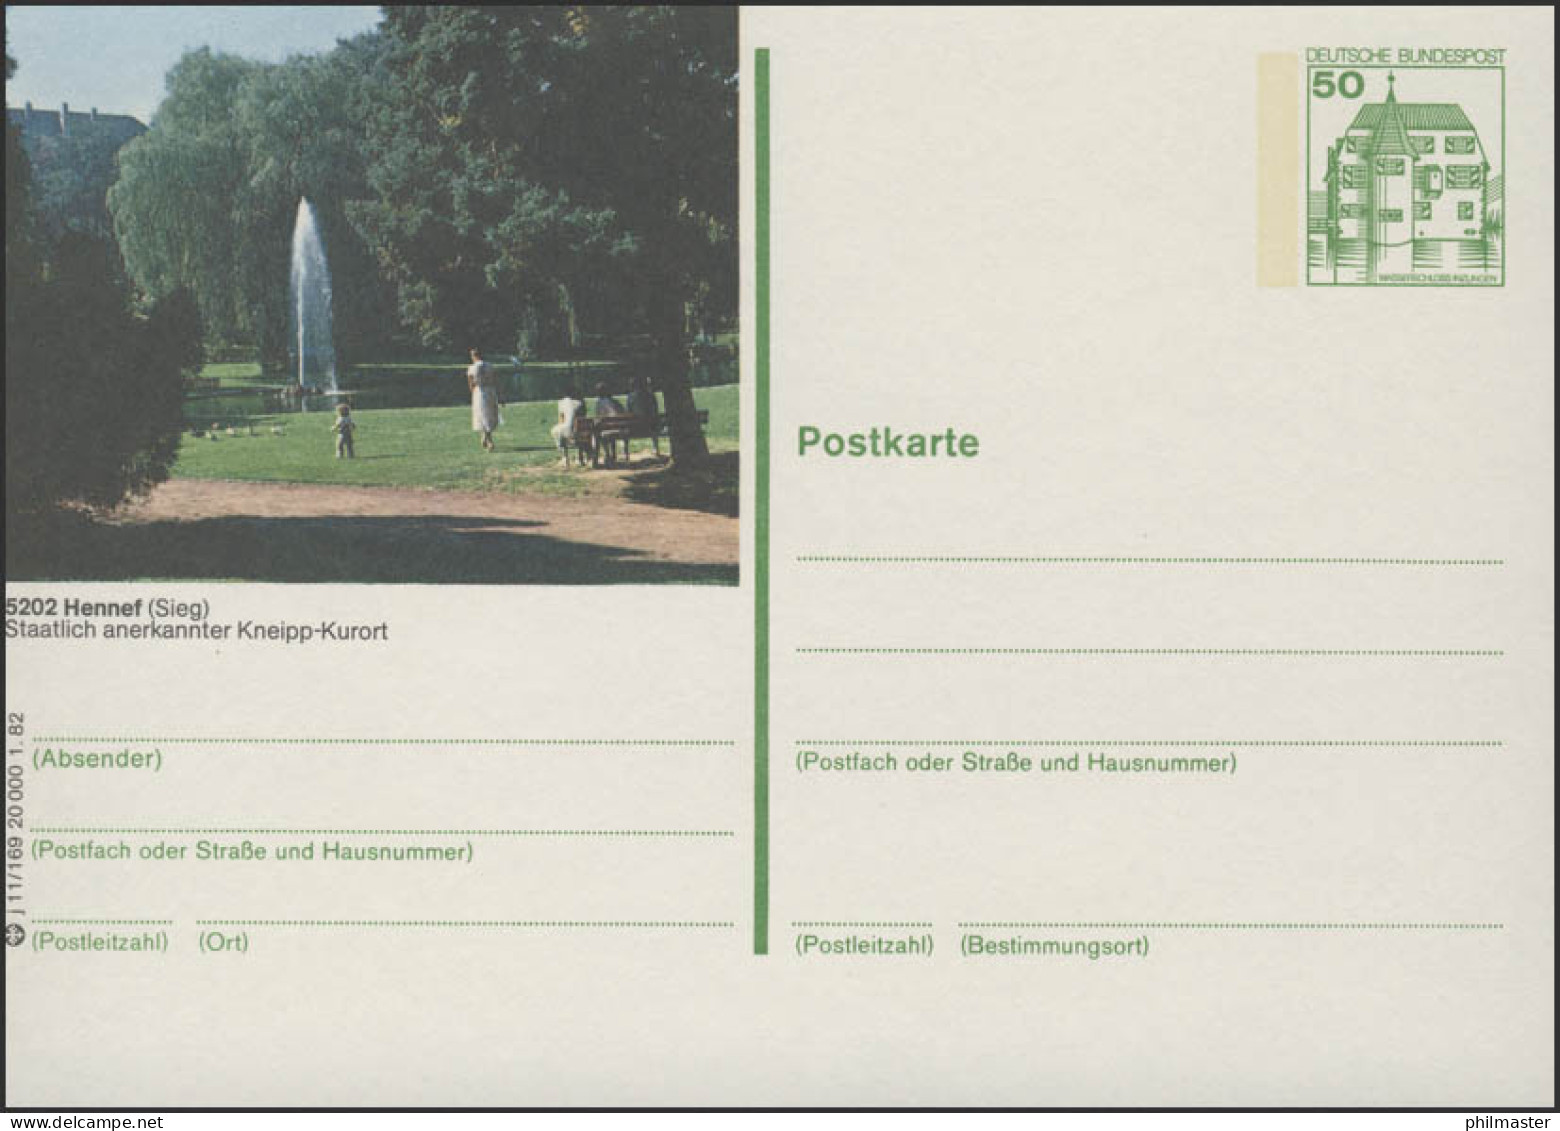 P134-j11/169 5202 Hennef - Kurpark Hennef ** - Illustrated Postcards - Mint